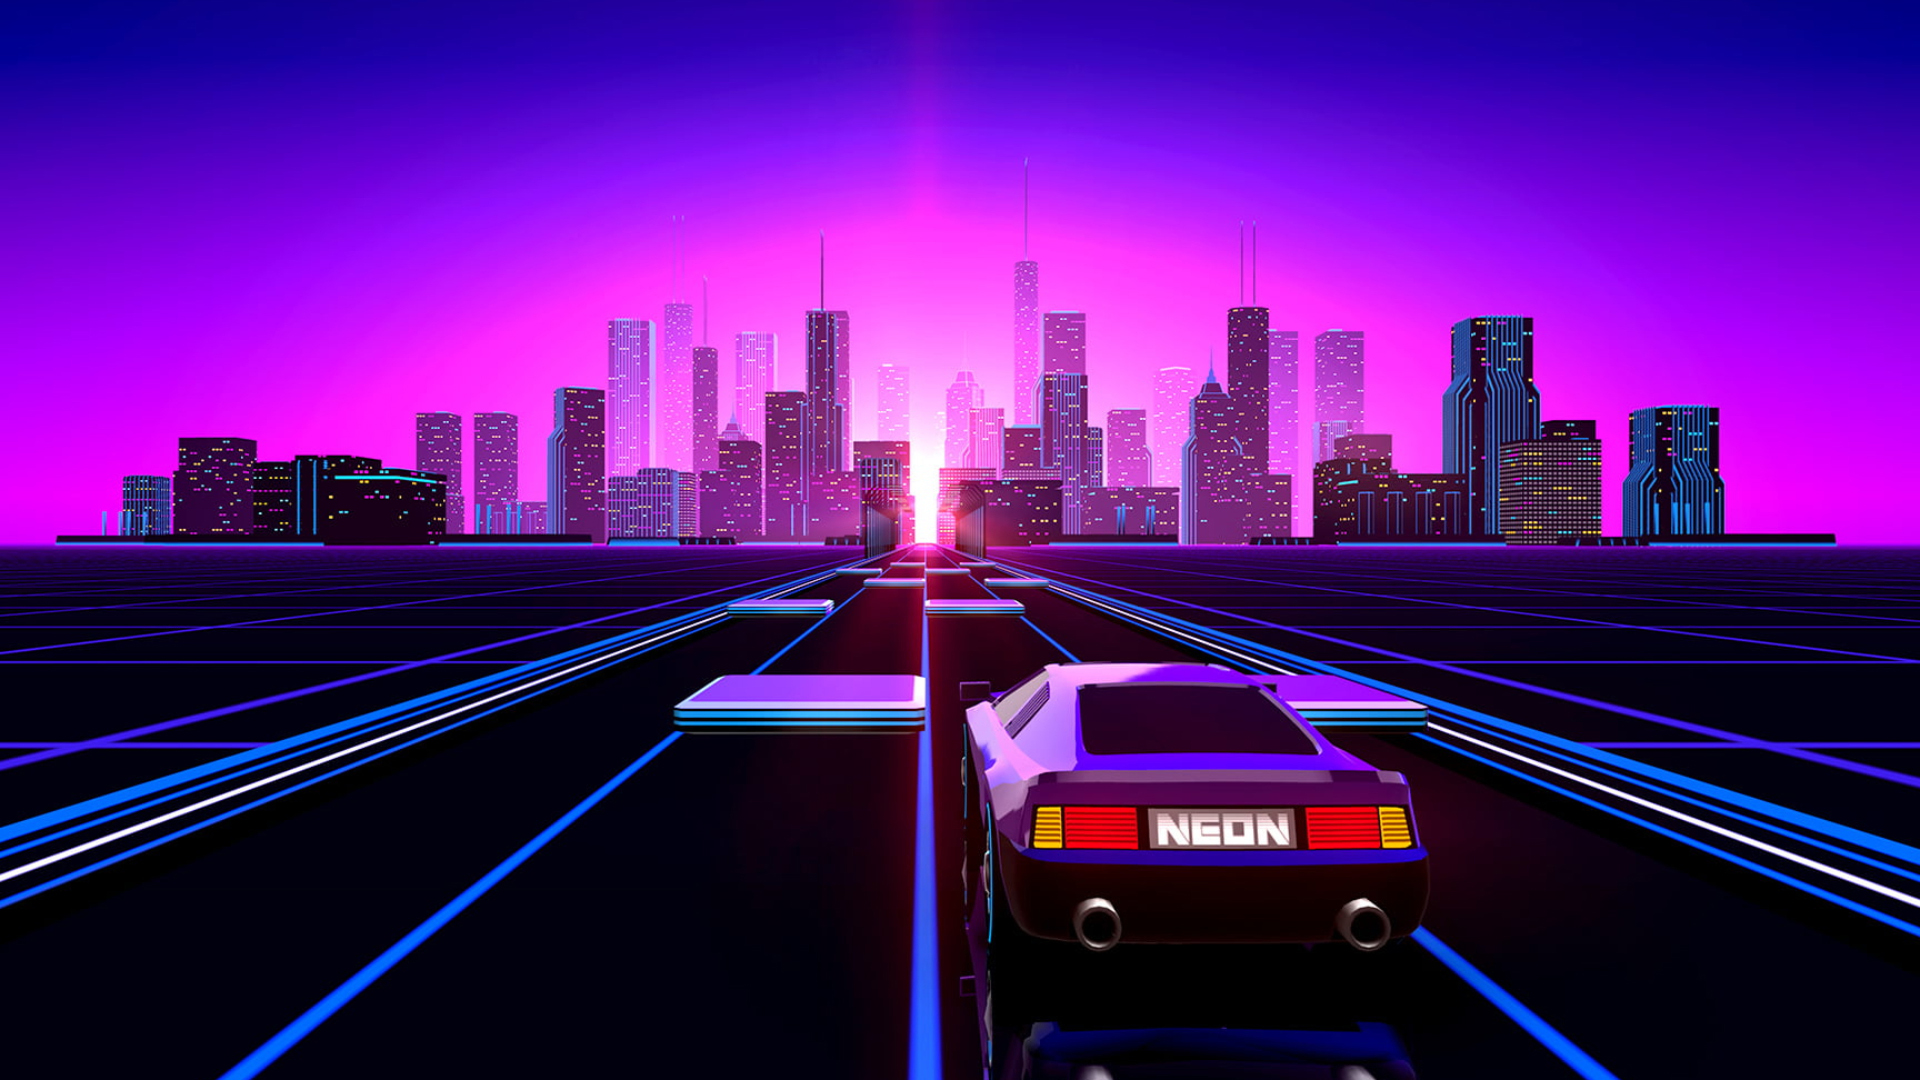 Neon Lights Buildings And Car On Road 2K Vaporwave